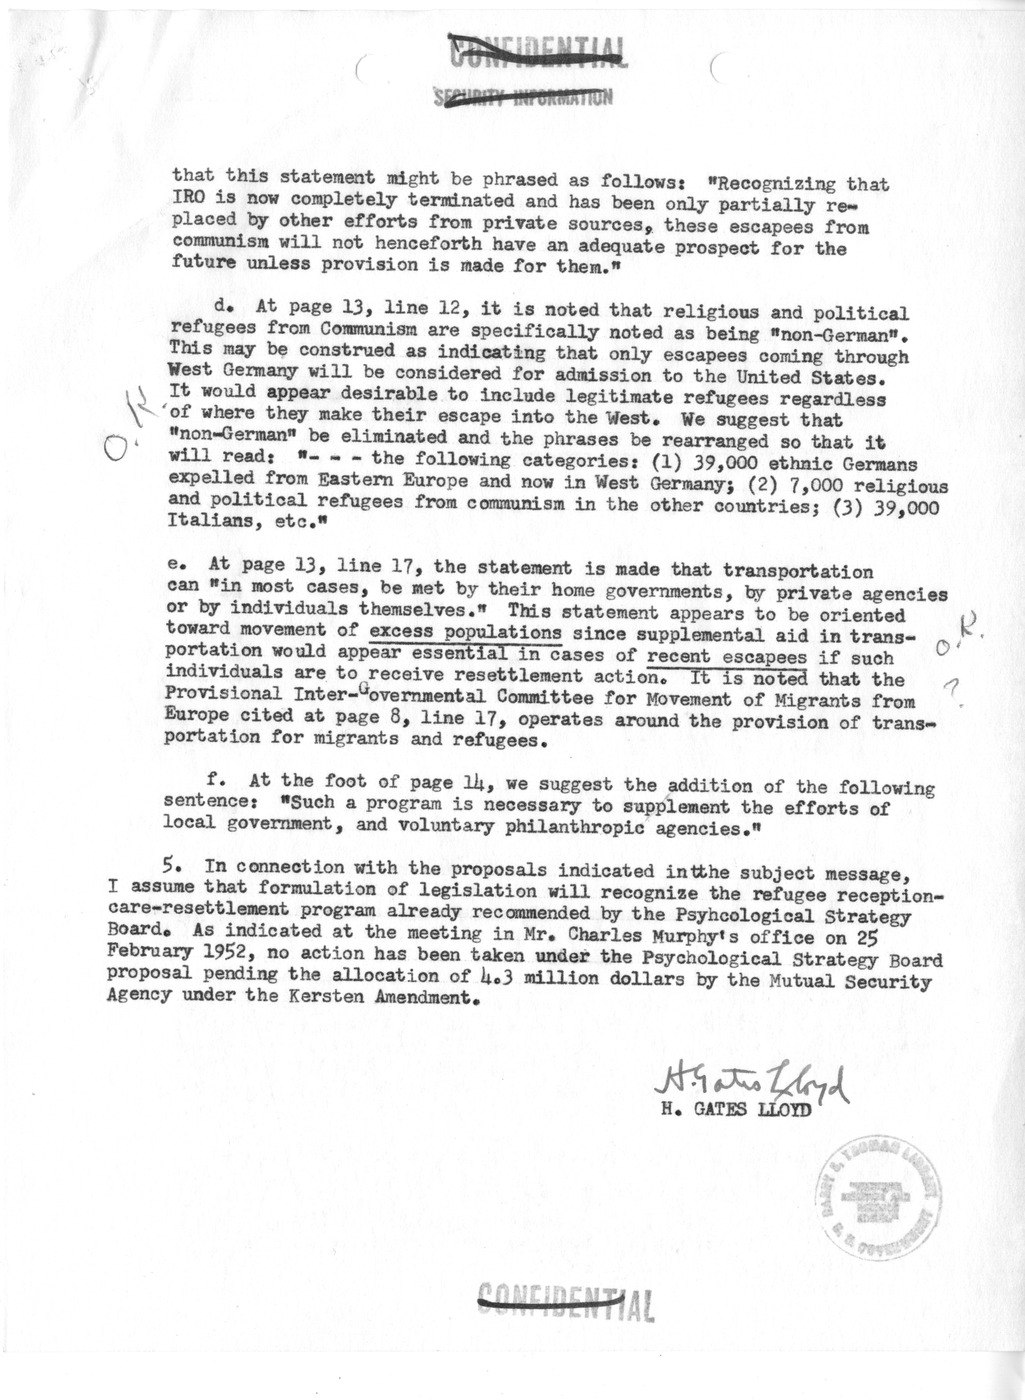 Memorandum from H. Gates Lloyd to David Lloyd